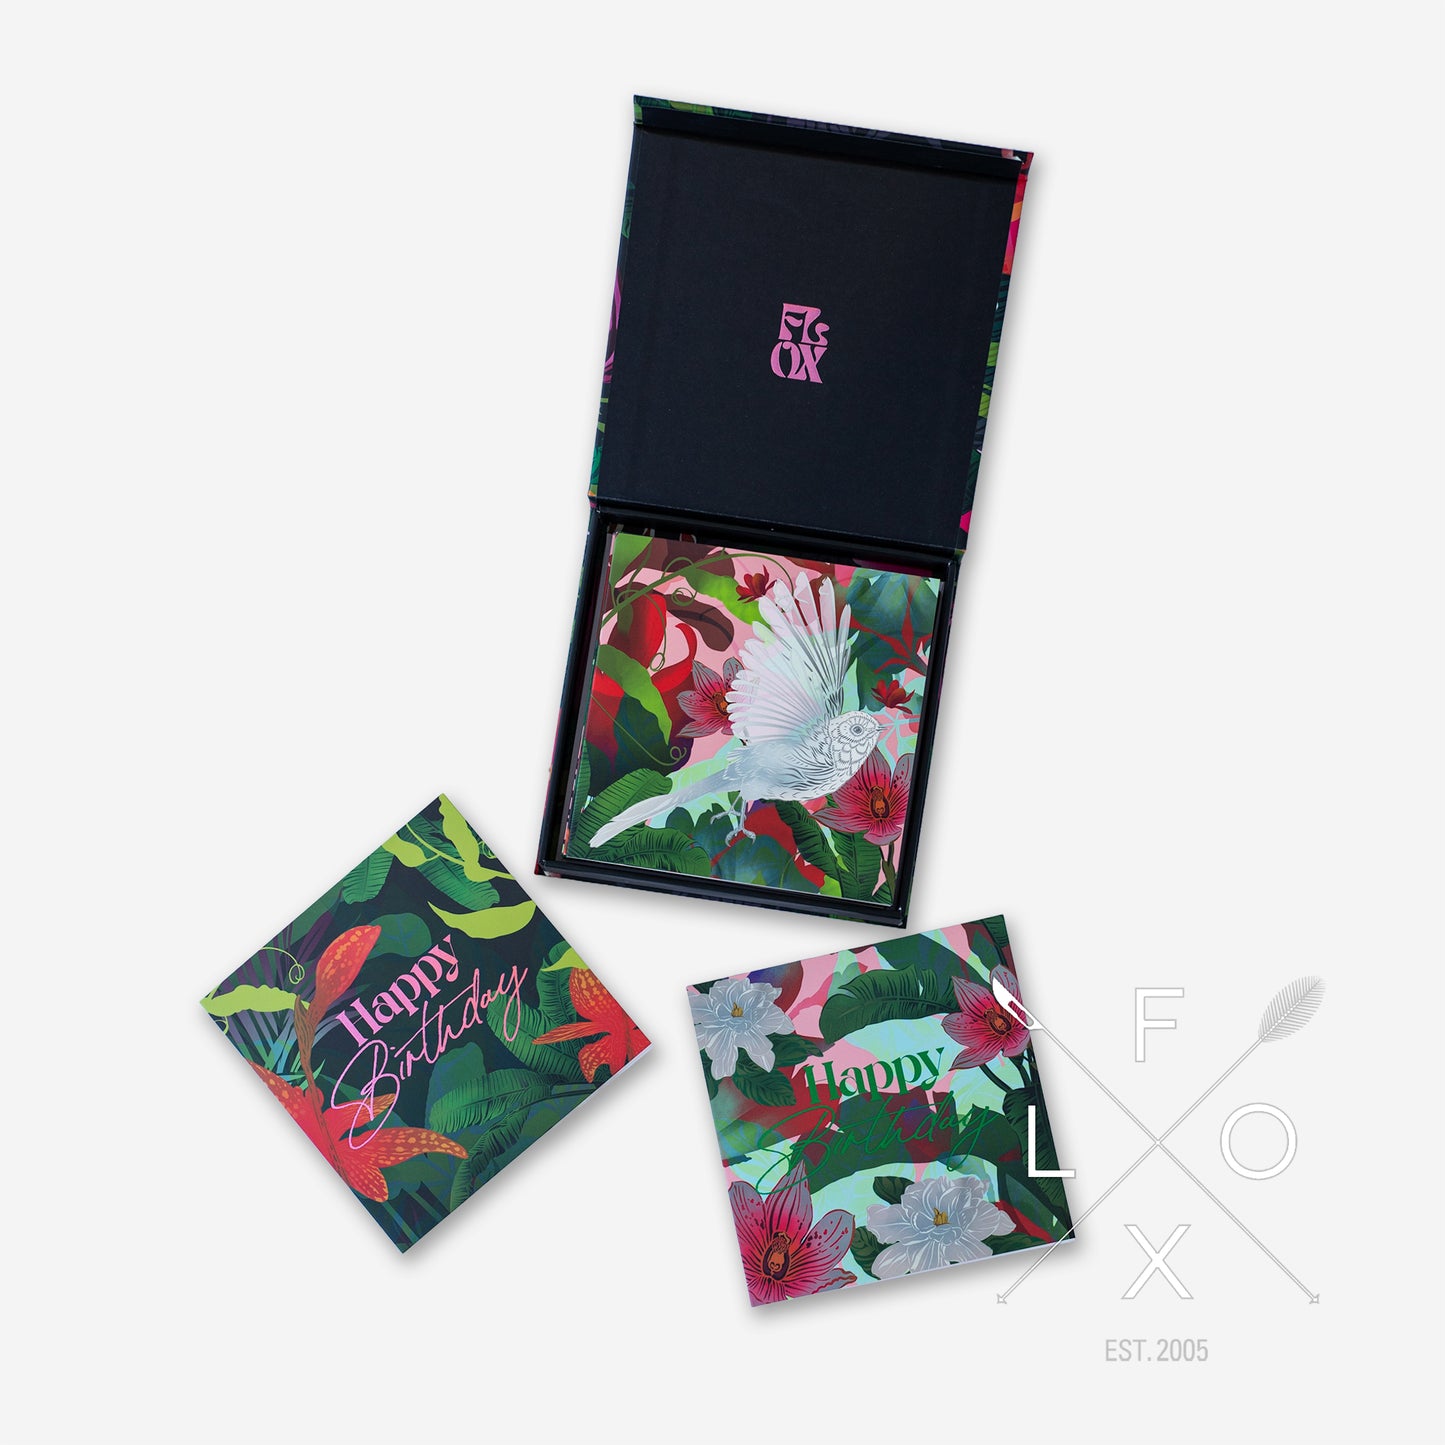 Flox | Gift Box Set of Cards